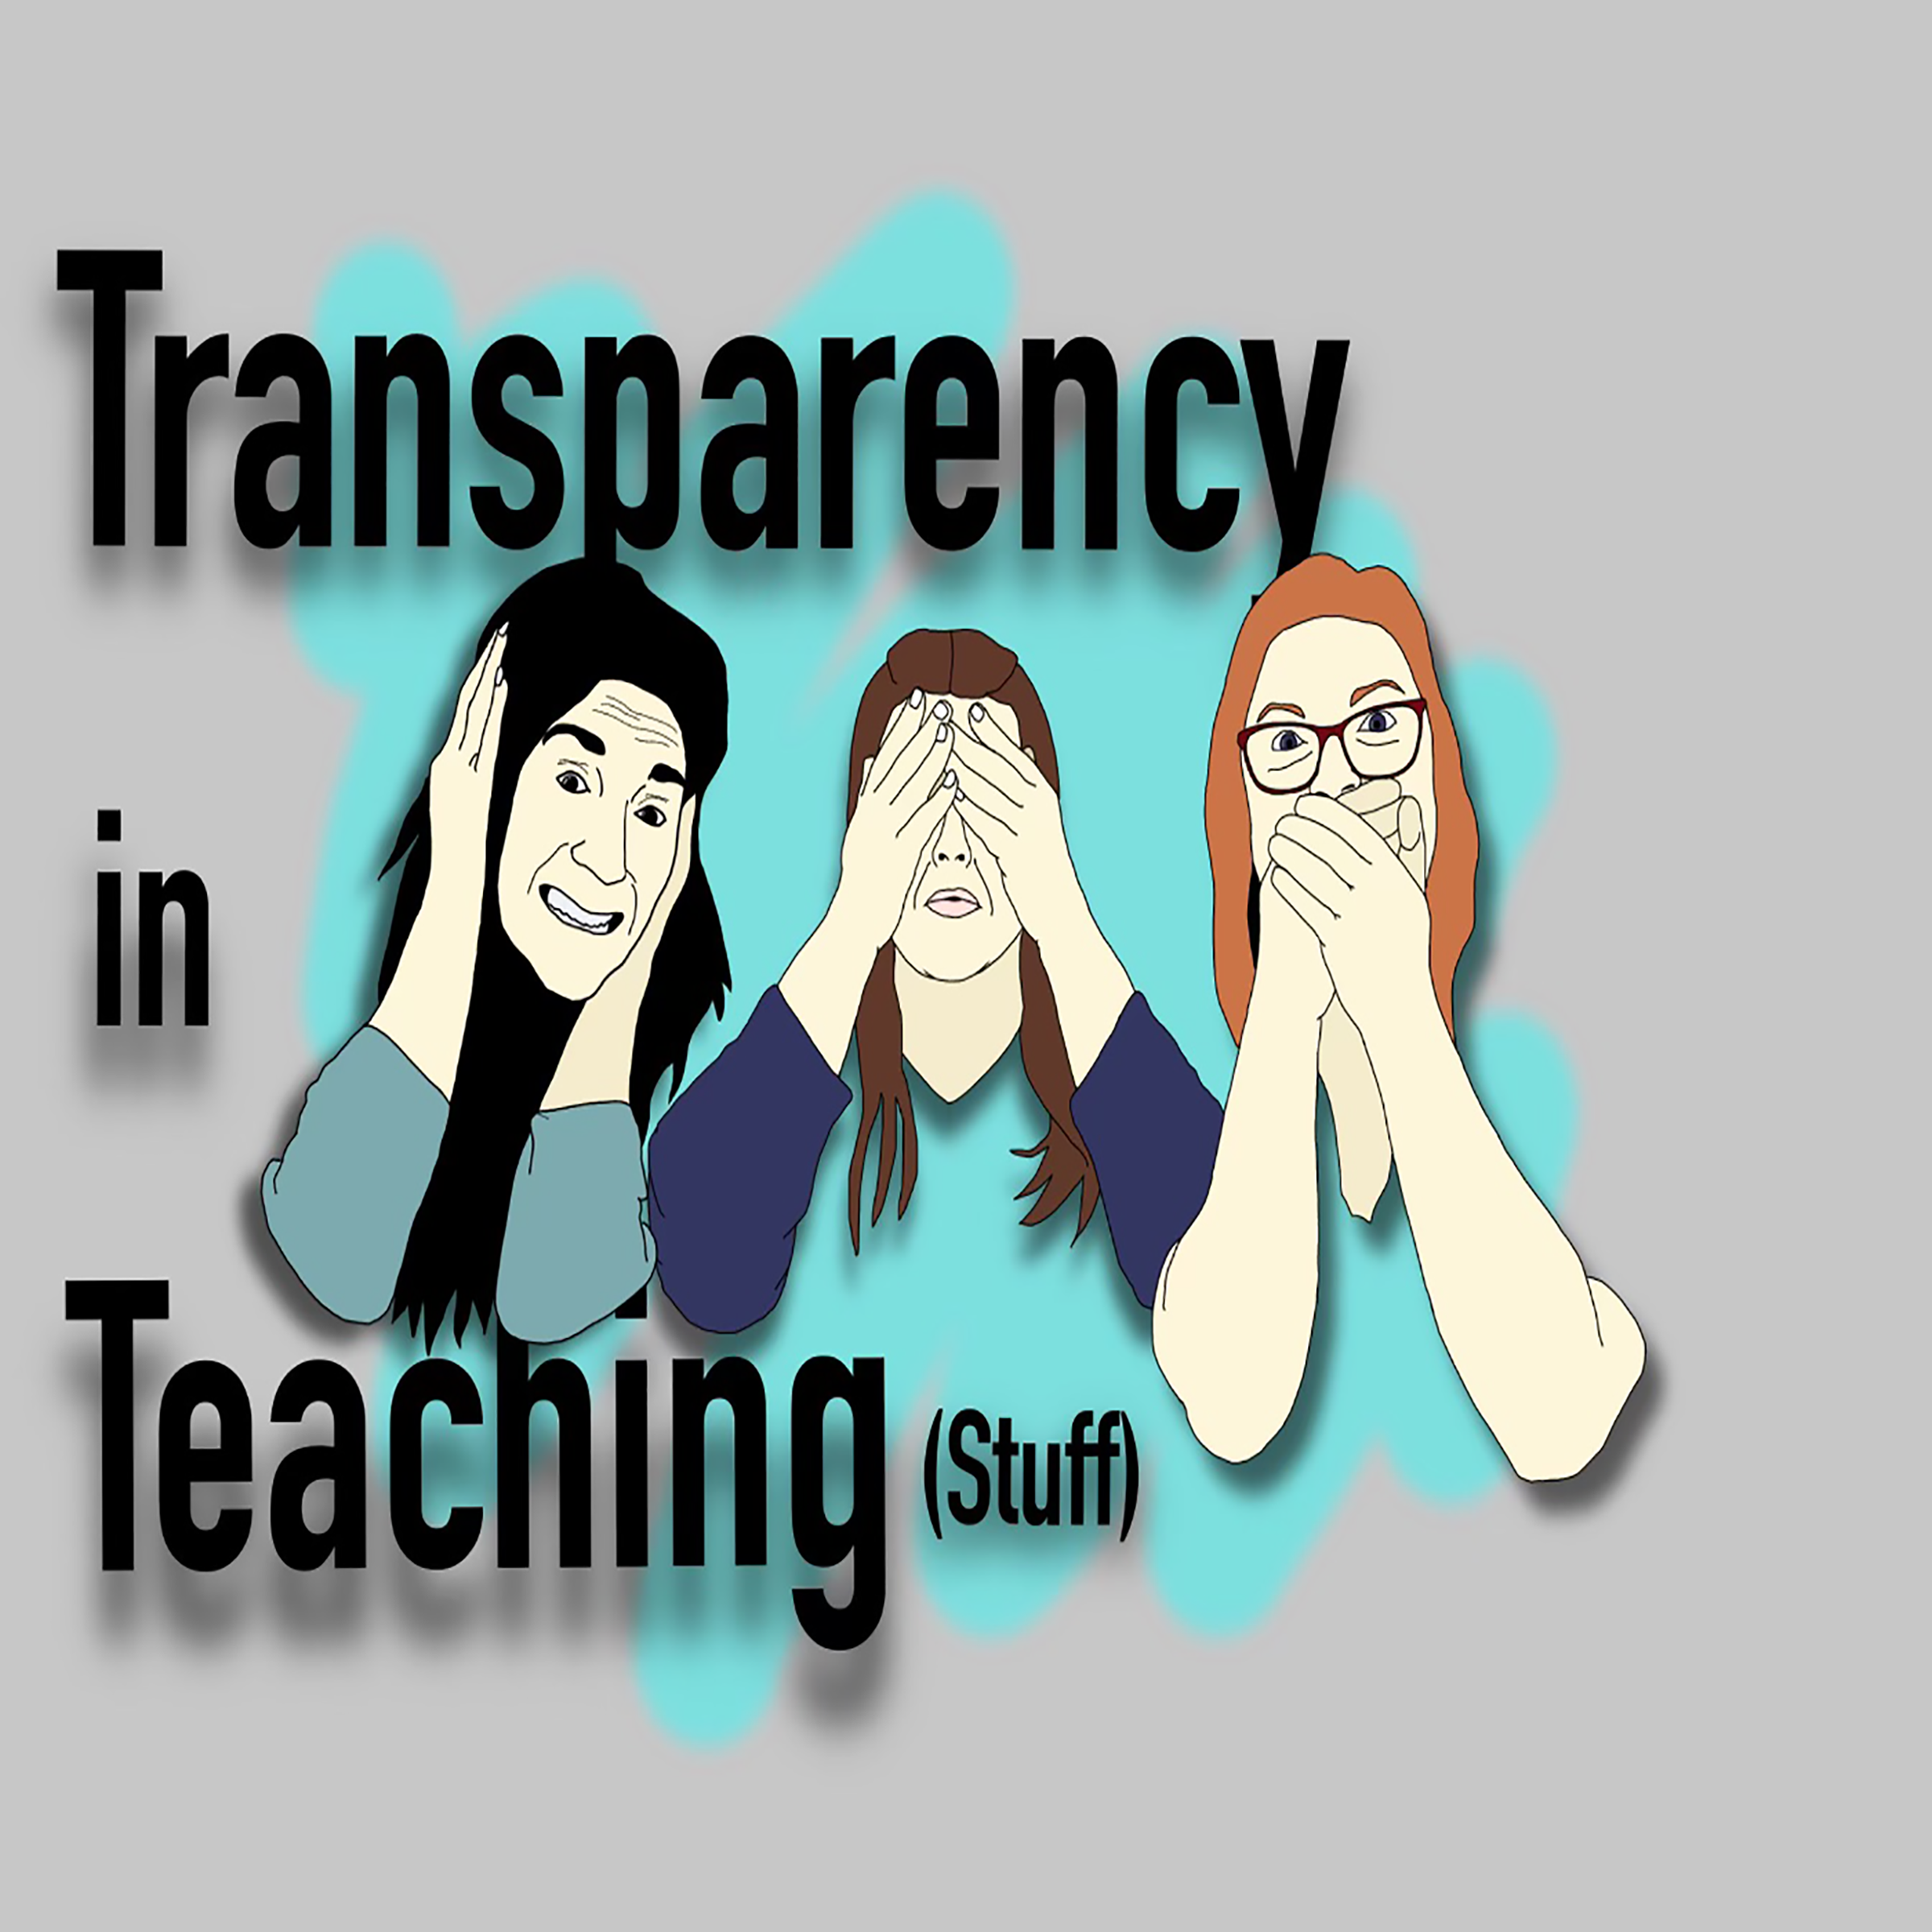 Transparency in Teaching (stuff)